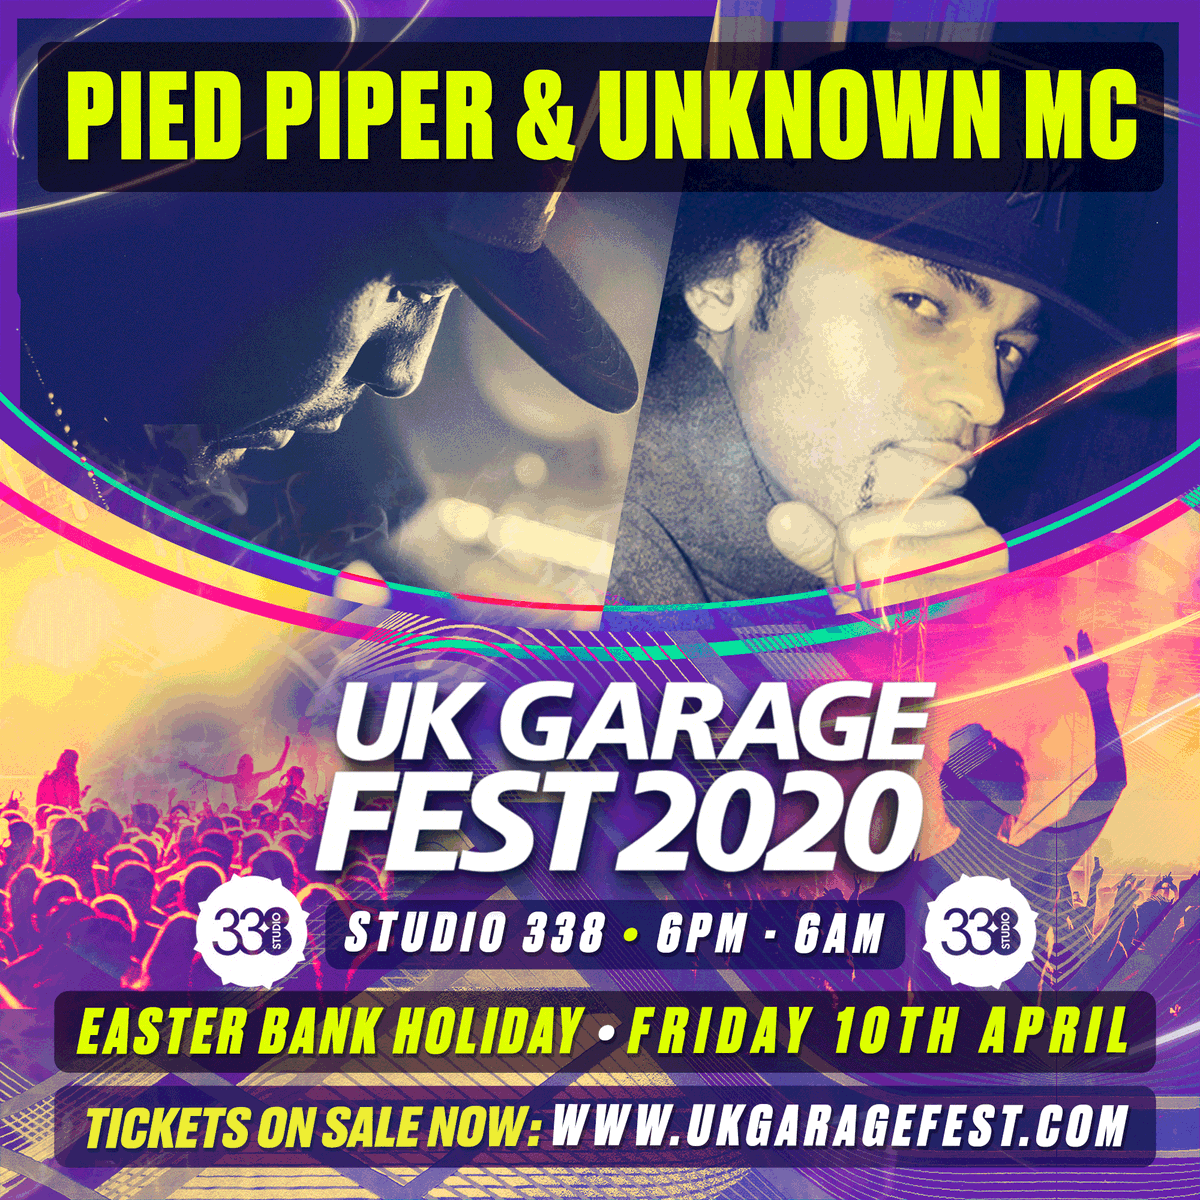 Catch @DJPiedPiper at the massive UK Garage Fest 2020 on Easter Bank Holiday Friday 10th April at Studio 338 London! Tickets ukgaragefest.com